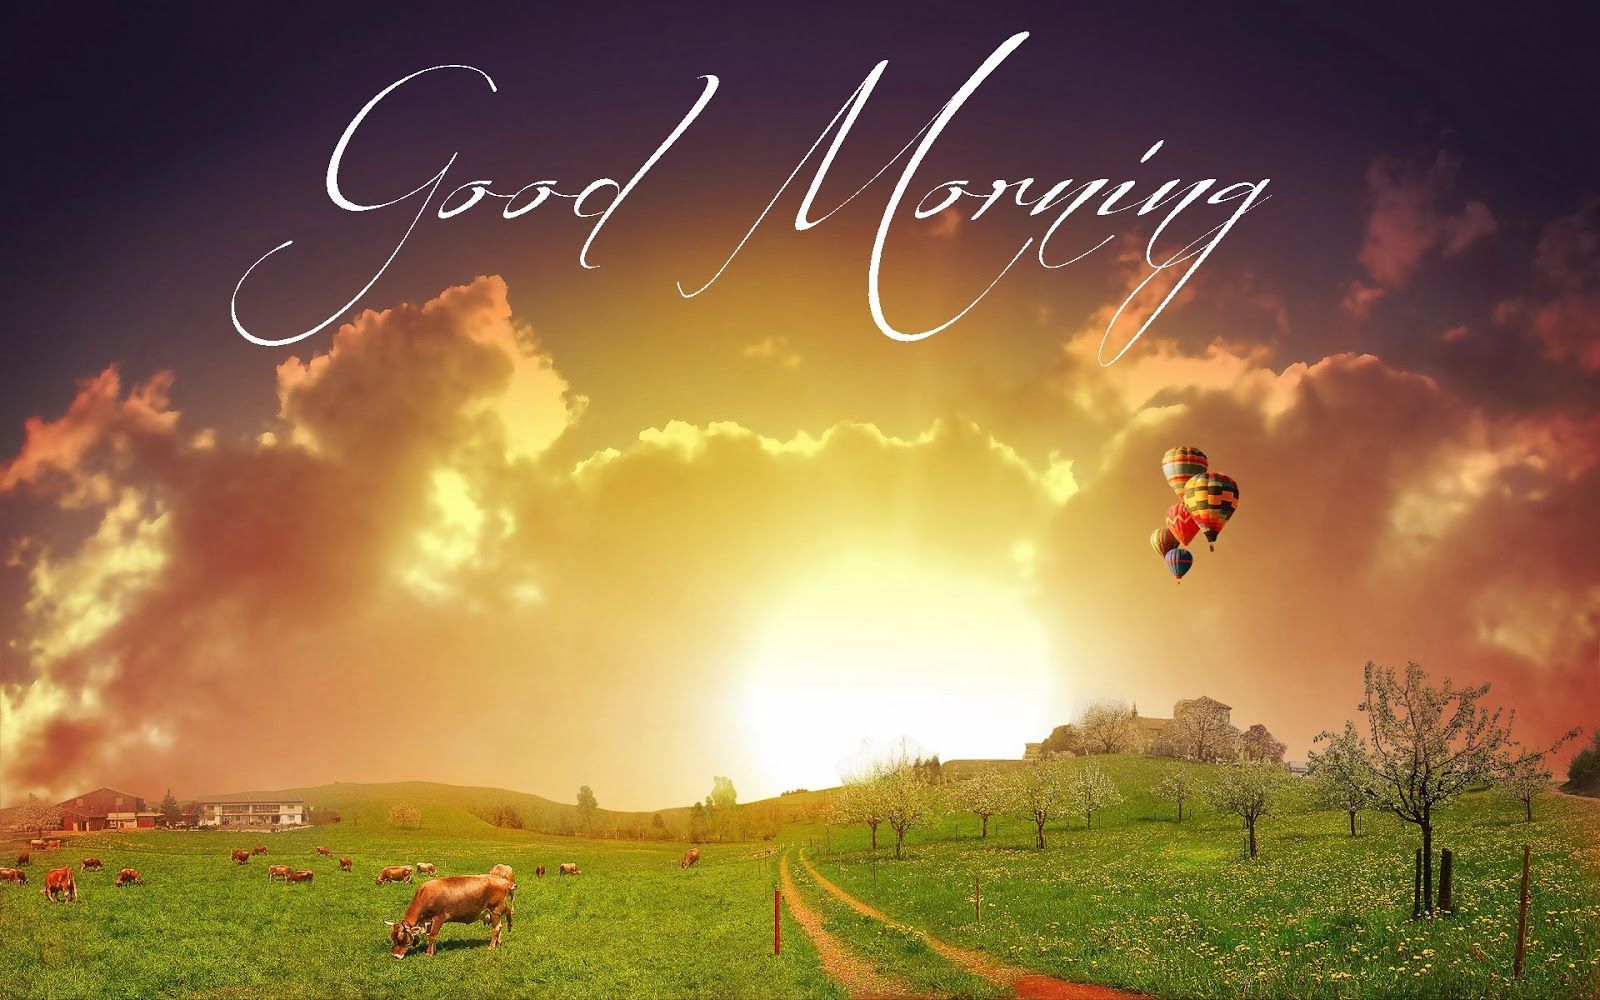 1600x1000 Good Morning Wonderful Wishes Image for Whatsapp. Sunrise wallpaper, Nature wallpaper, Beautiful sunrise on WallpaperBat